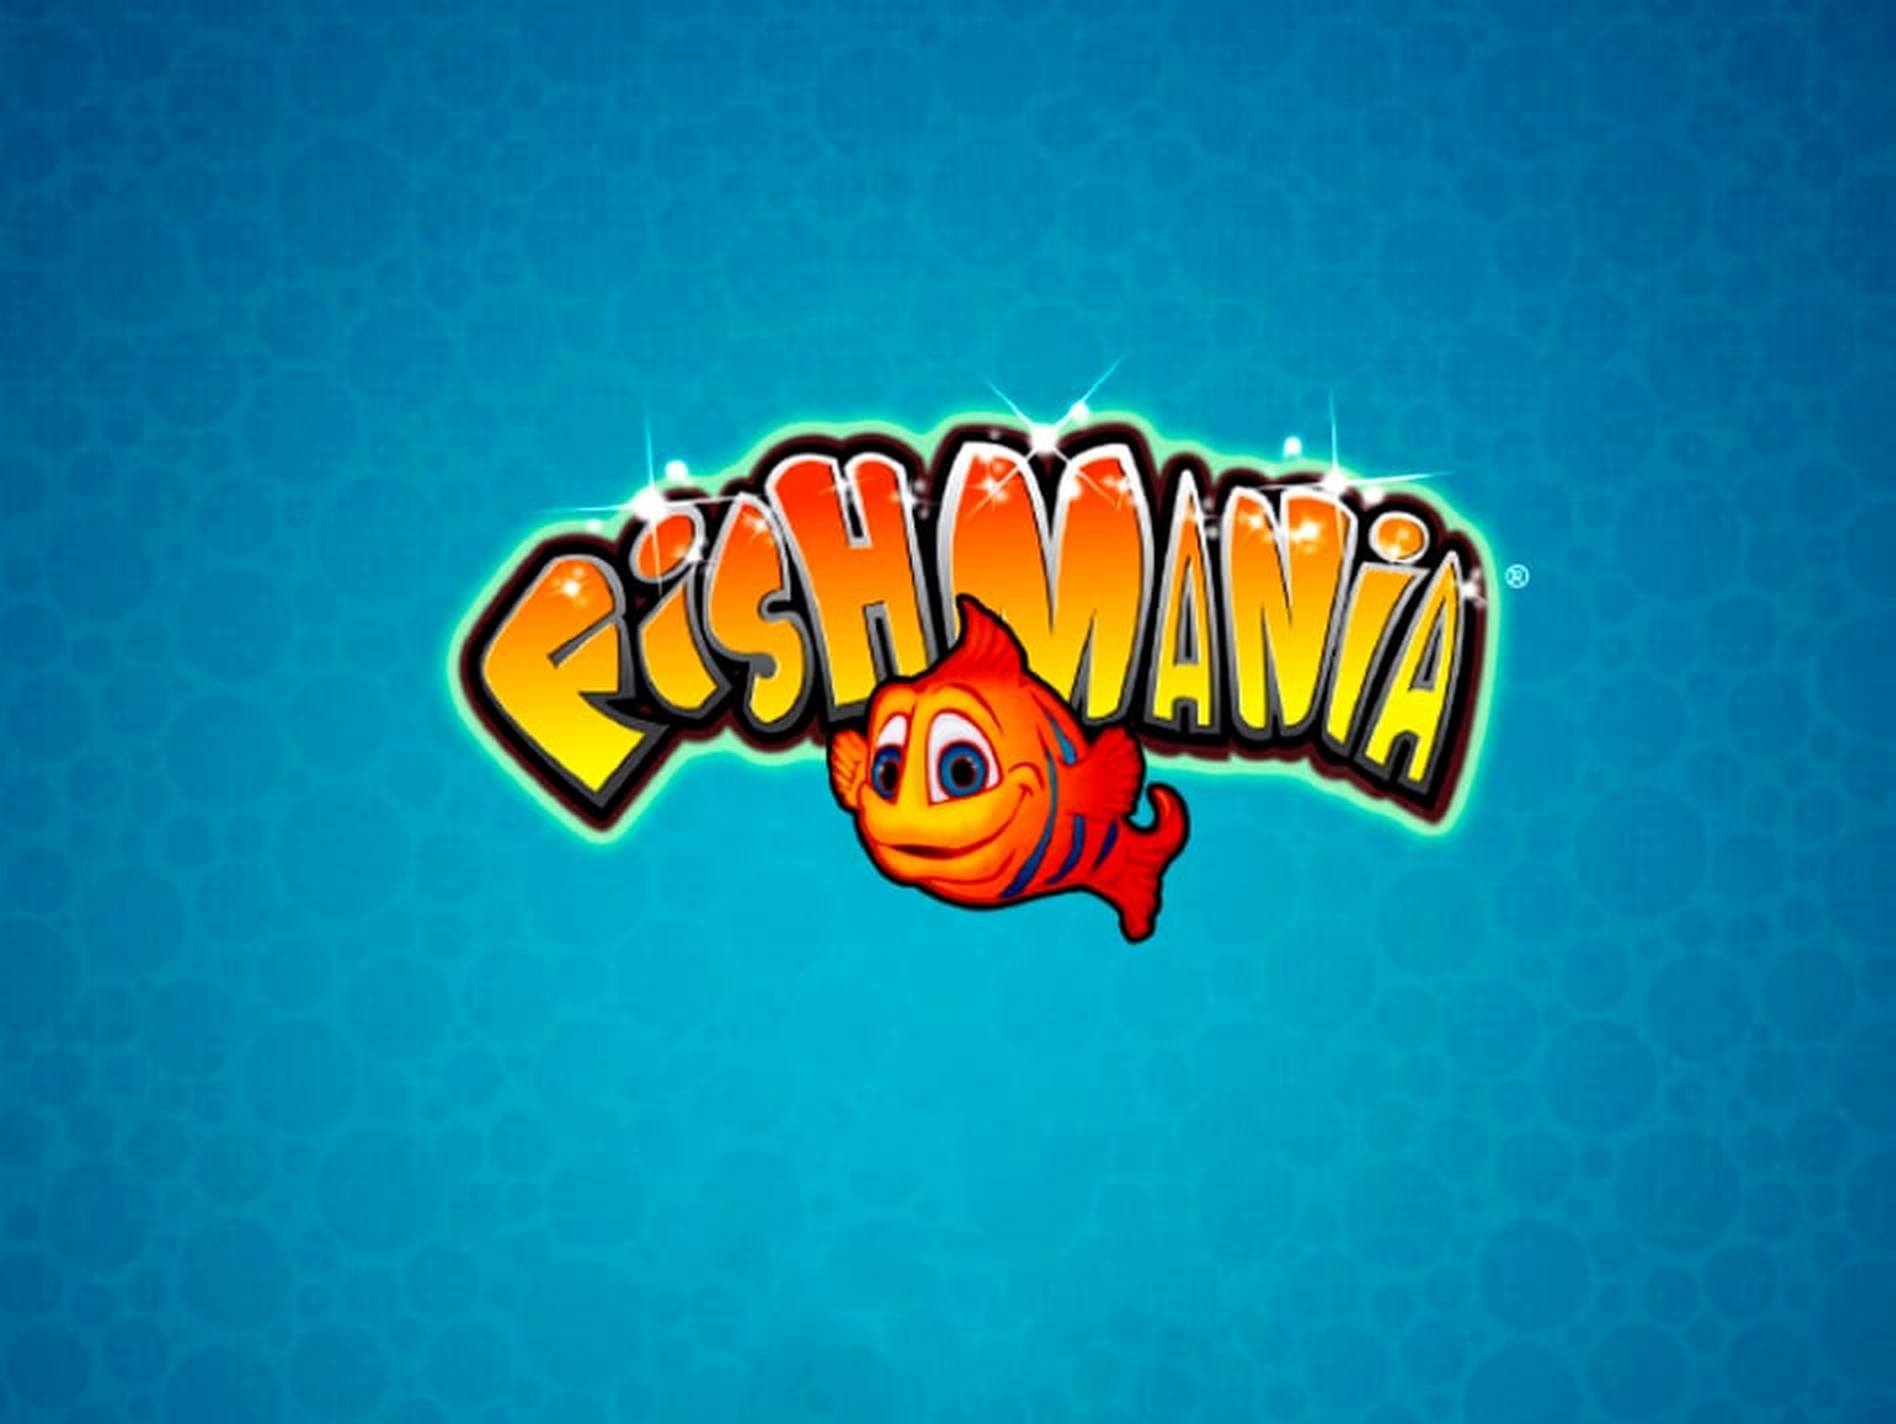 Fishmania Bingo